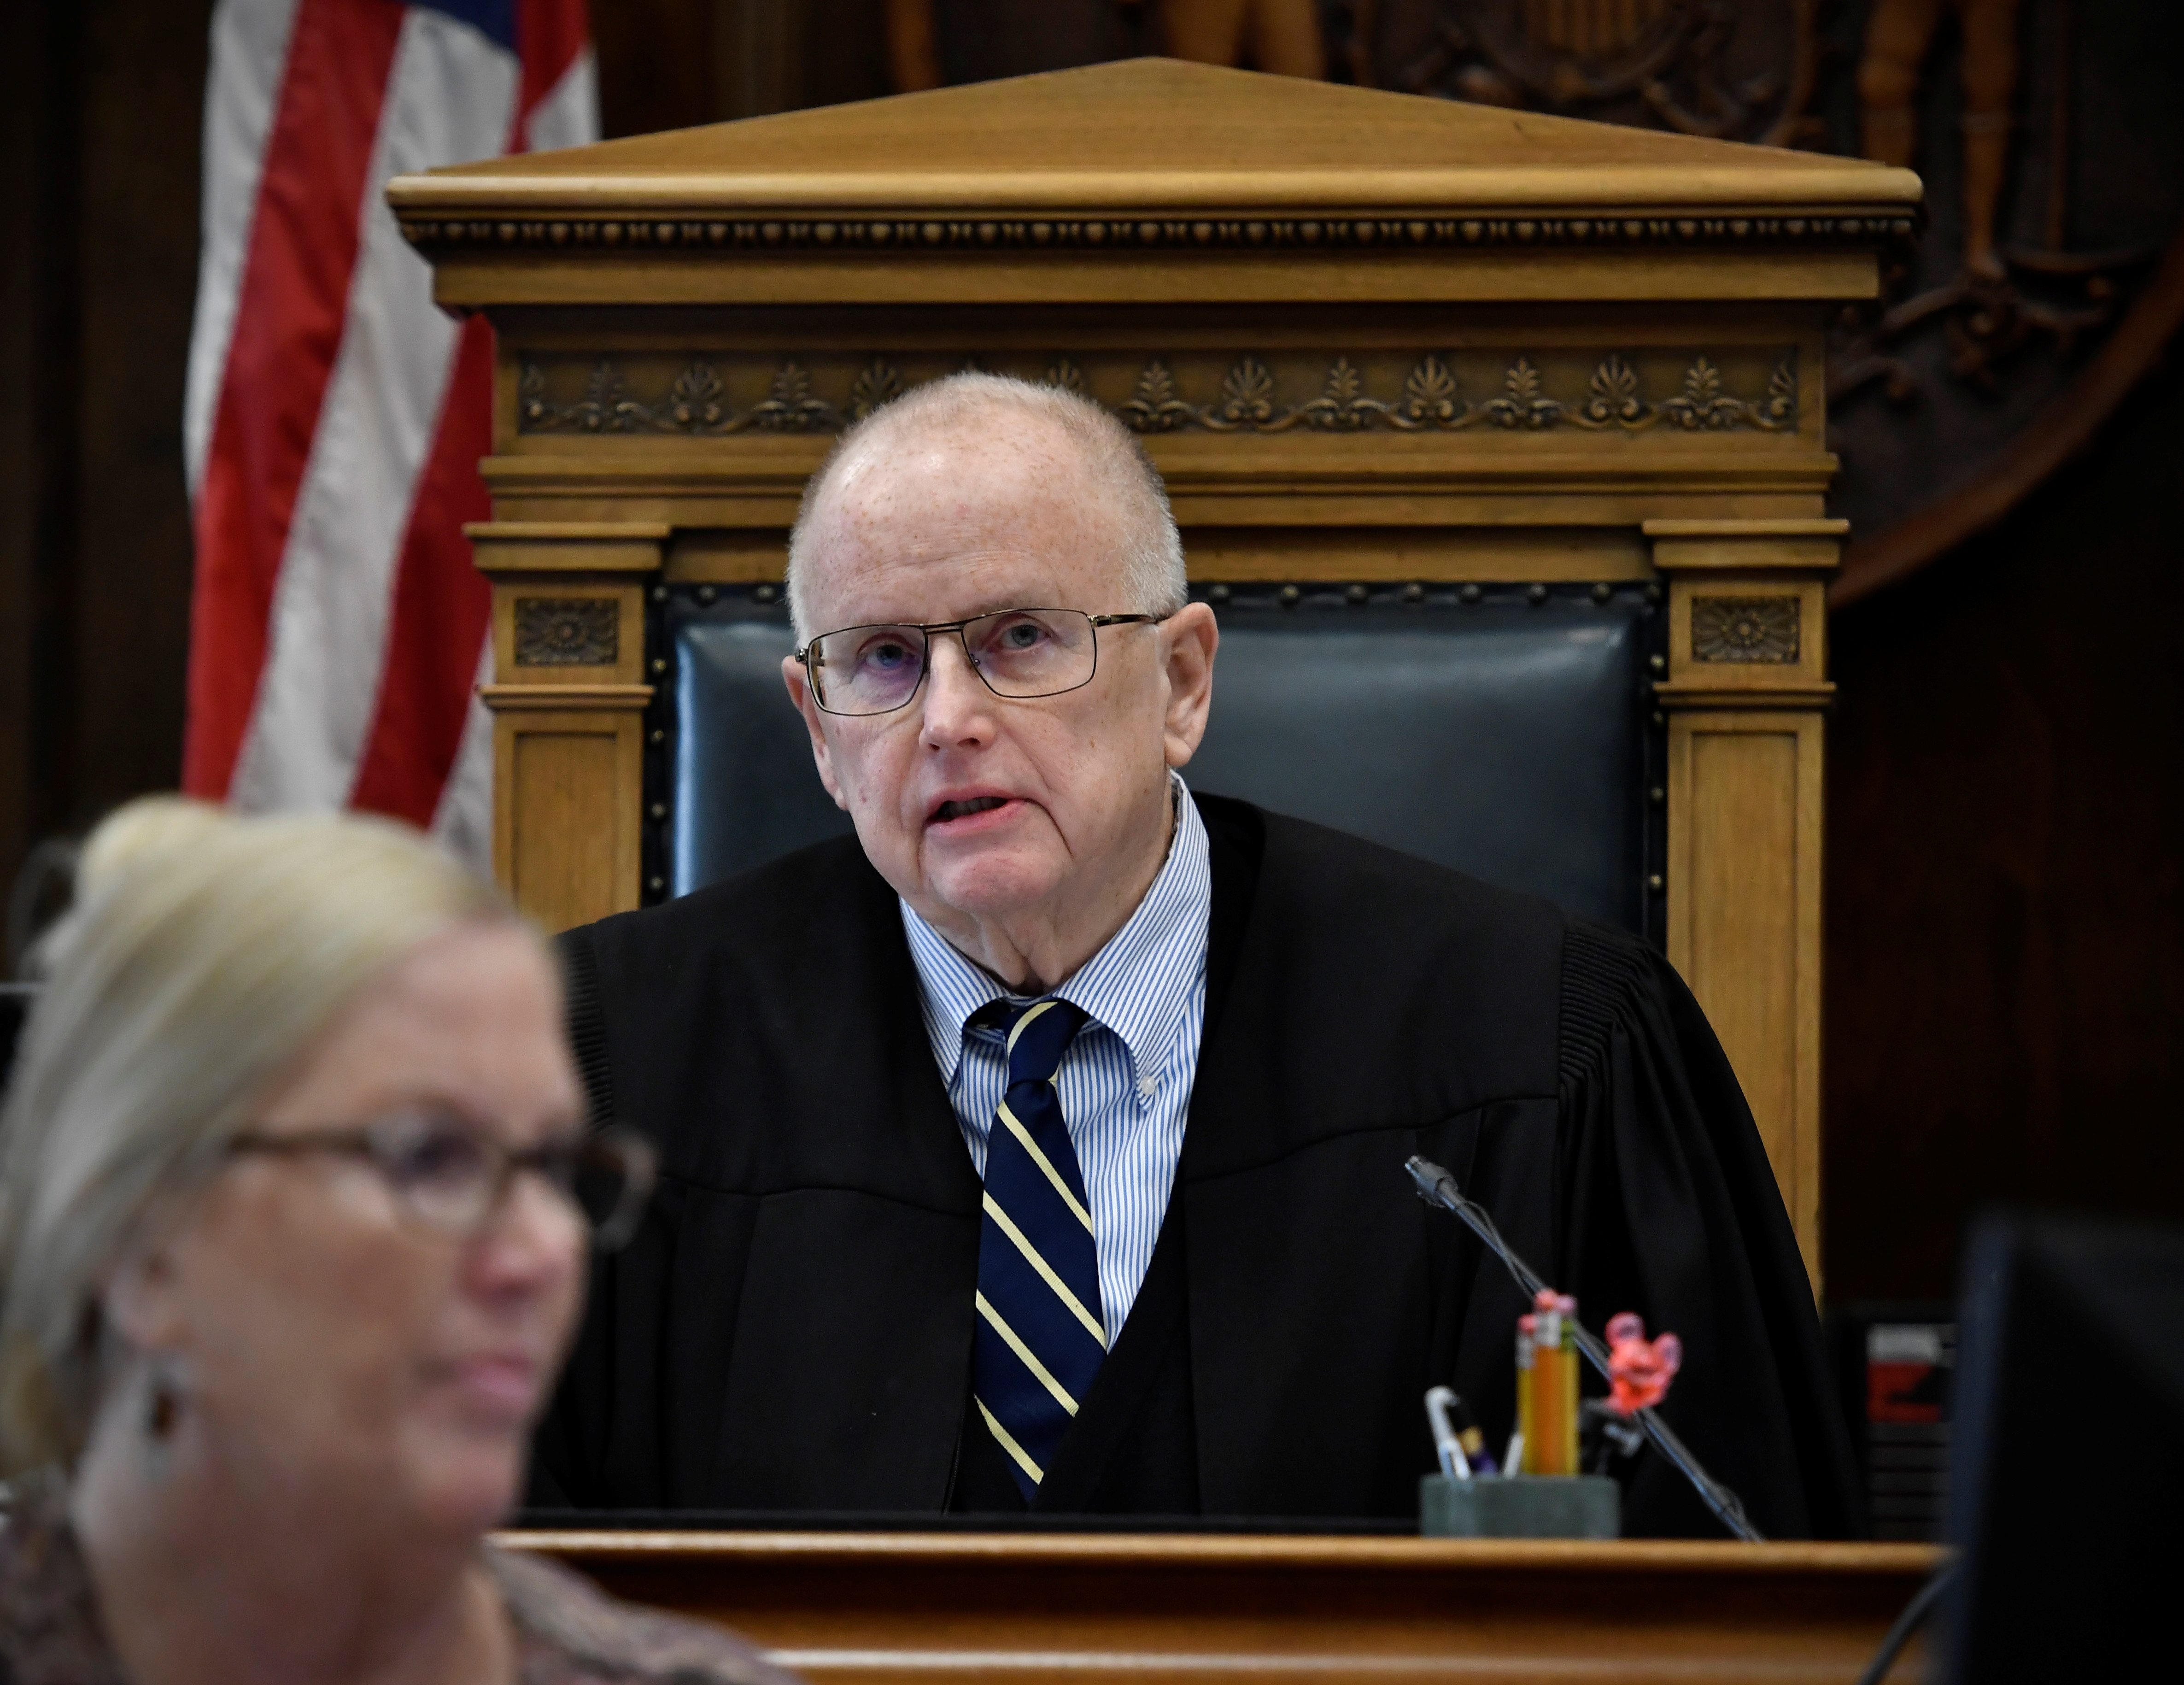 Kyle Rittenhouse's trial, in Kenosha, Wisconsin